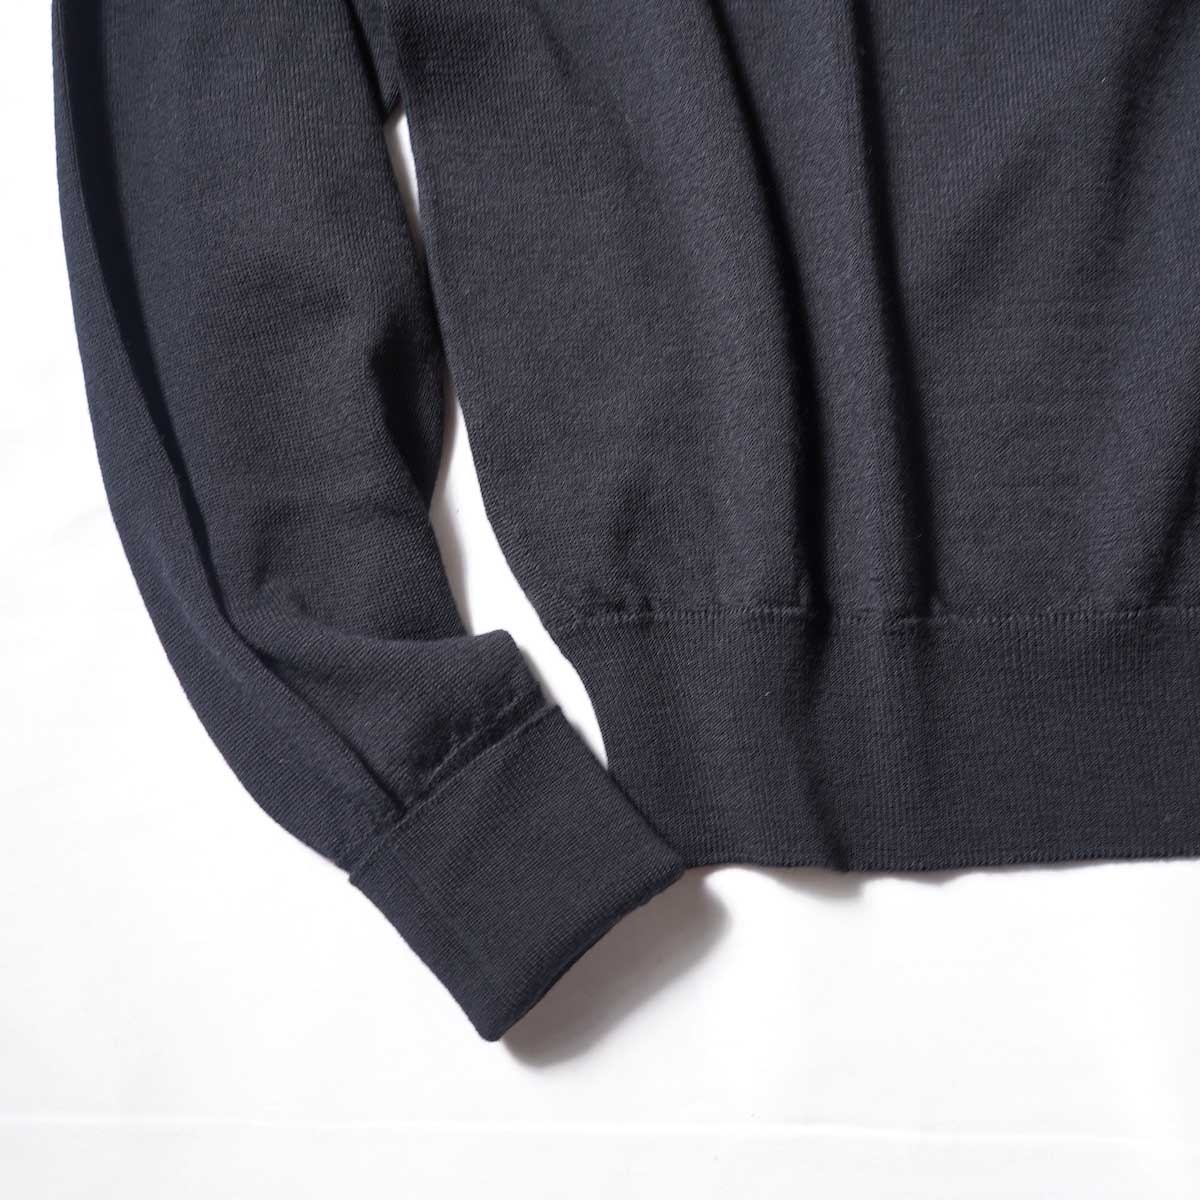 JOHN SMEDLEY / A4588 PULLOVER RC LS (Black)裾、袖